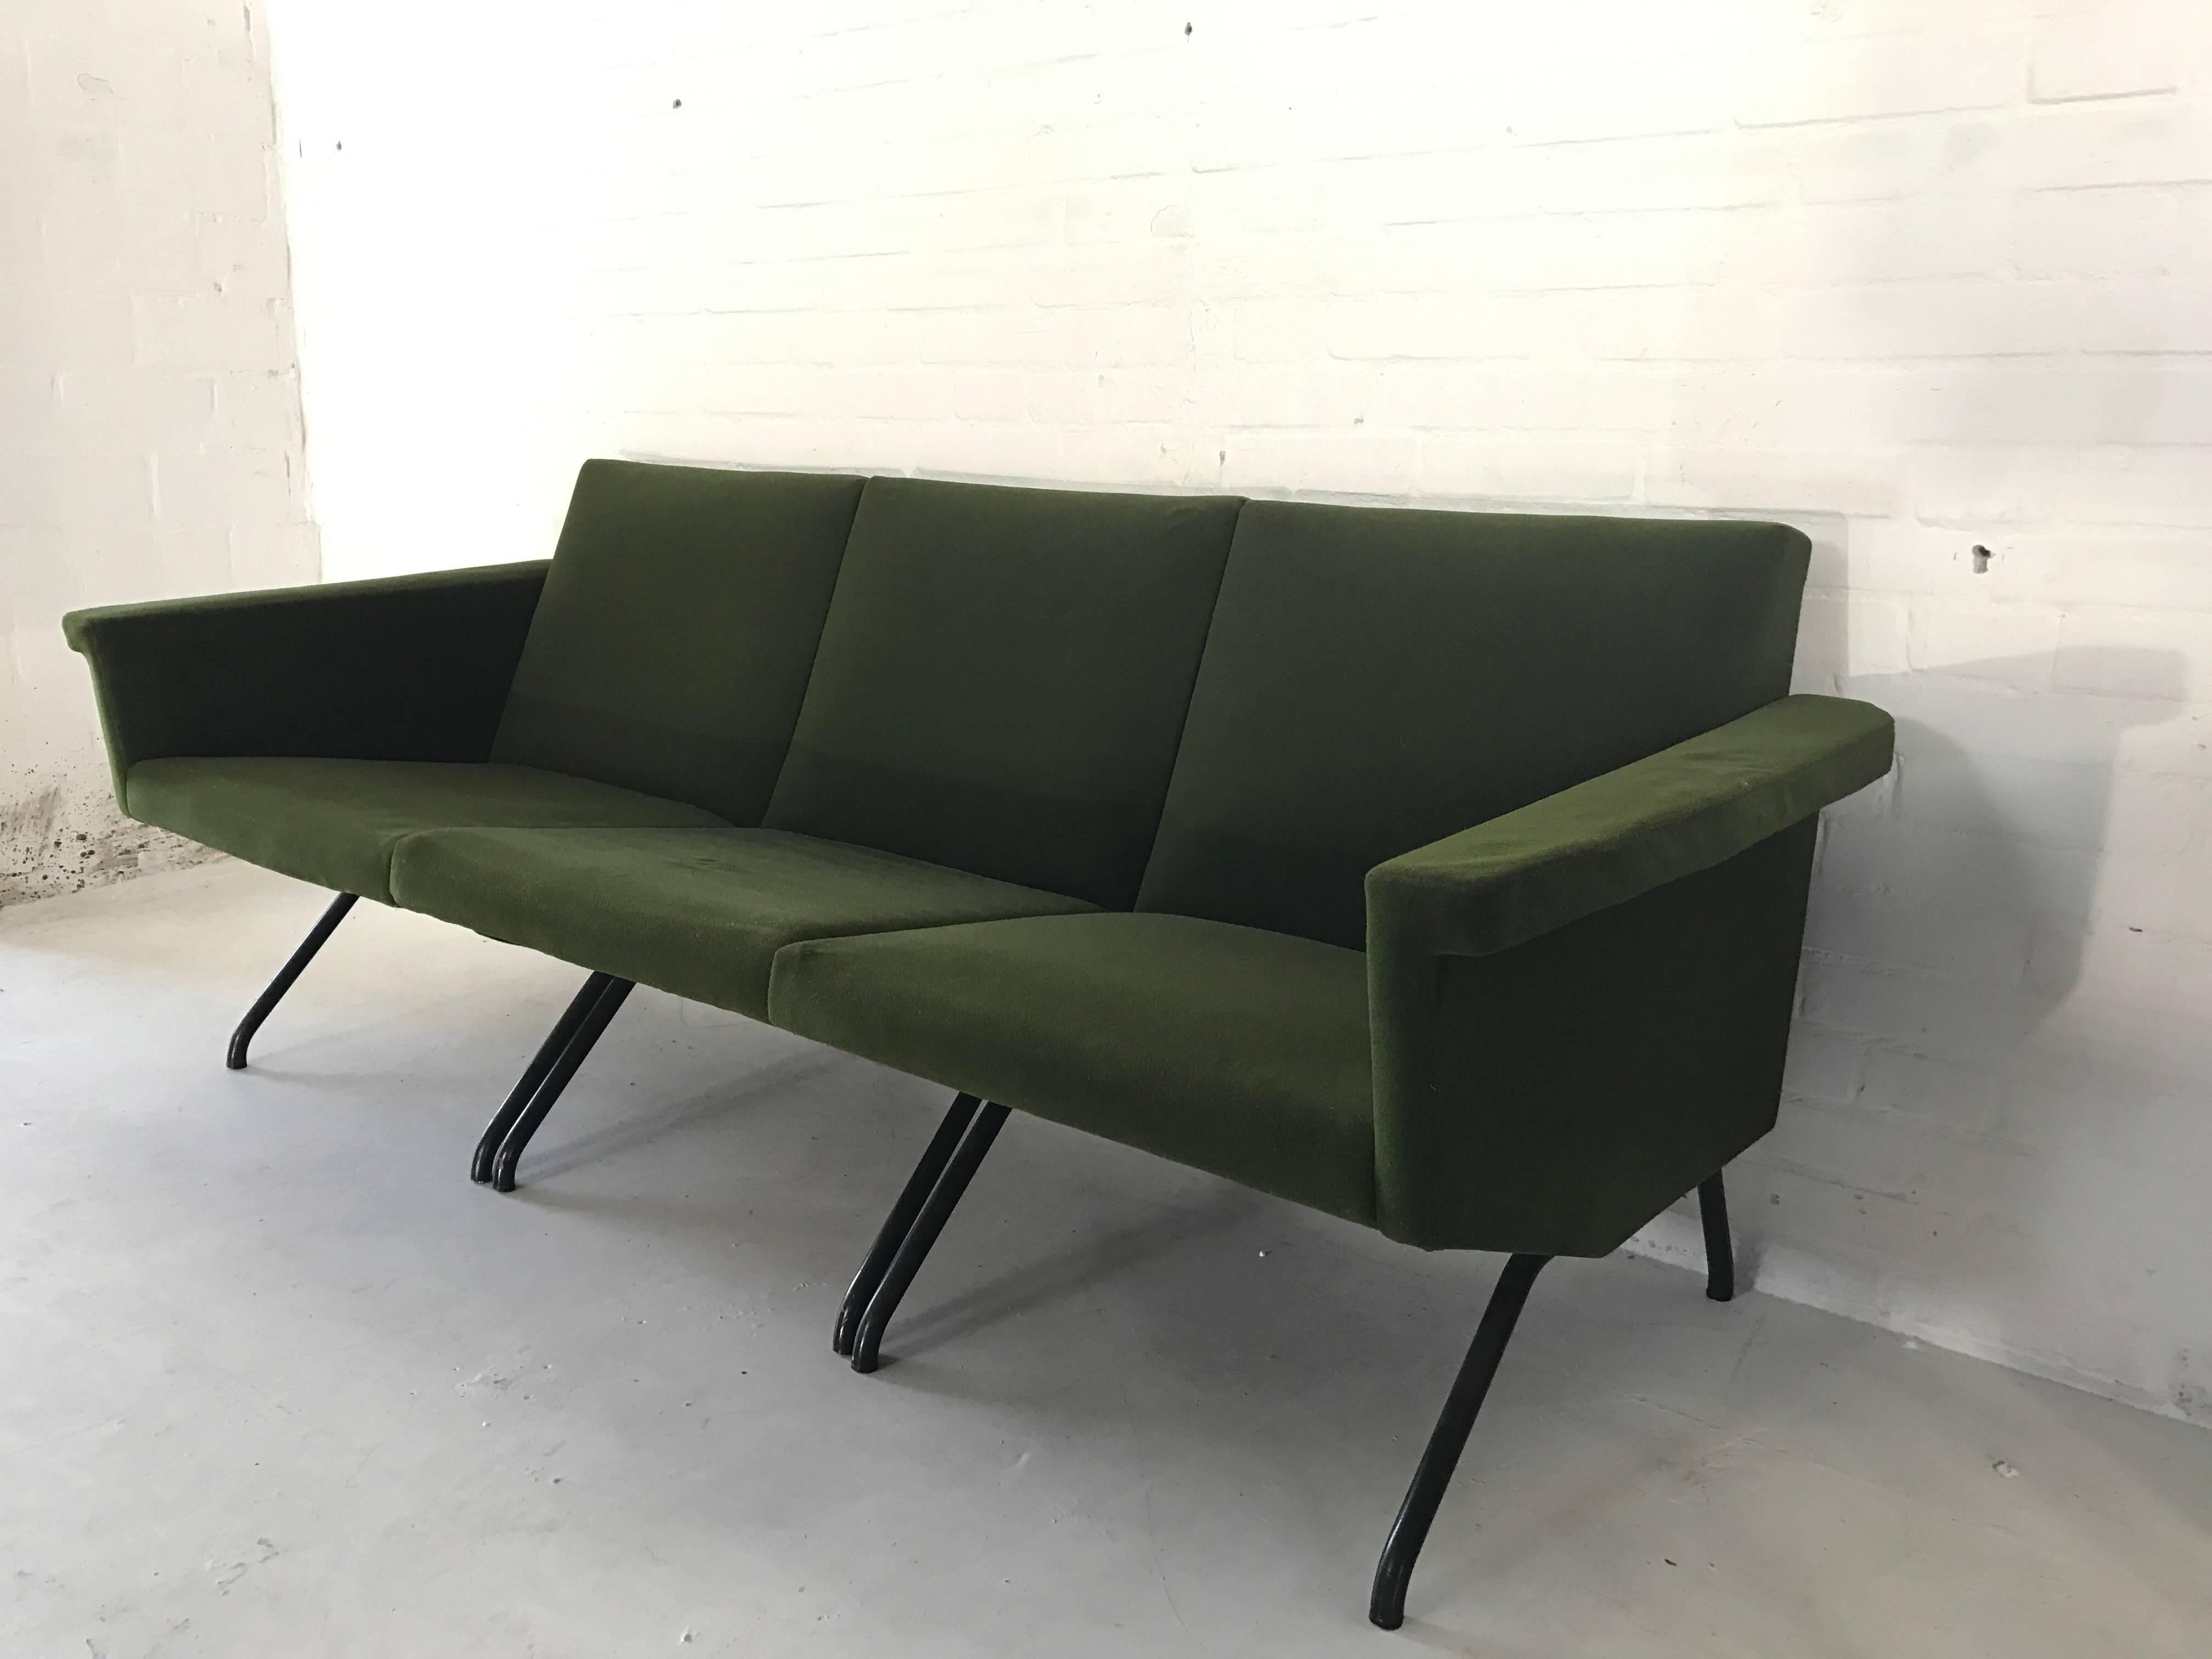 French Pierre Guariche Mid-Century Modern Segmented Sofa For Sale